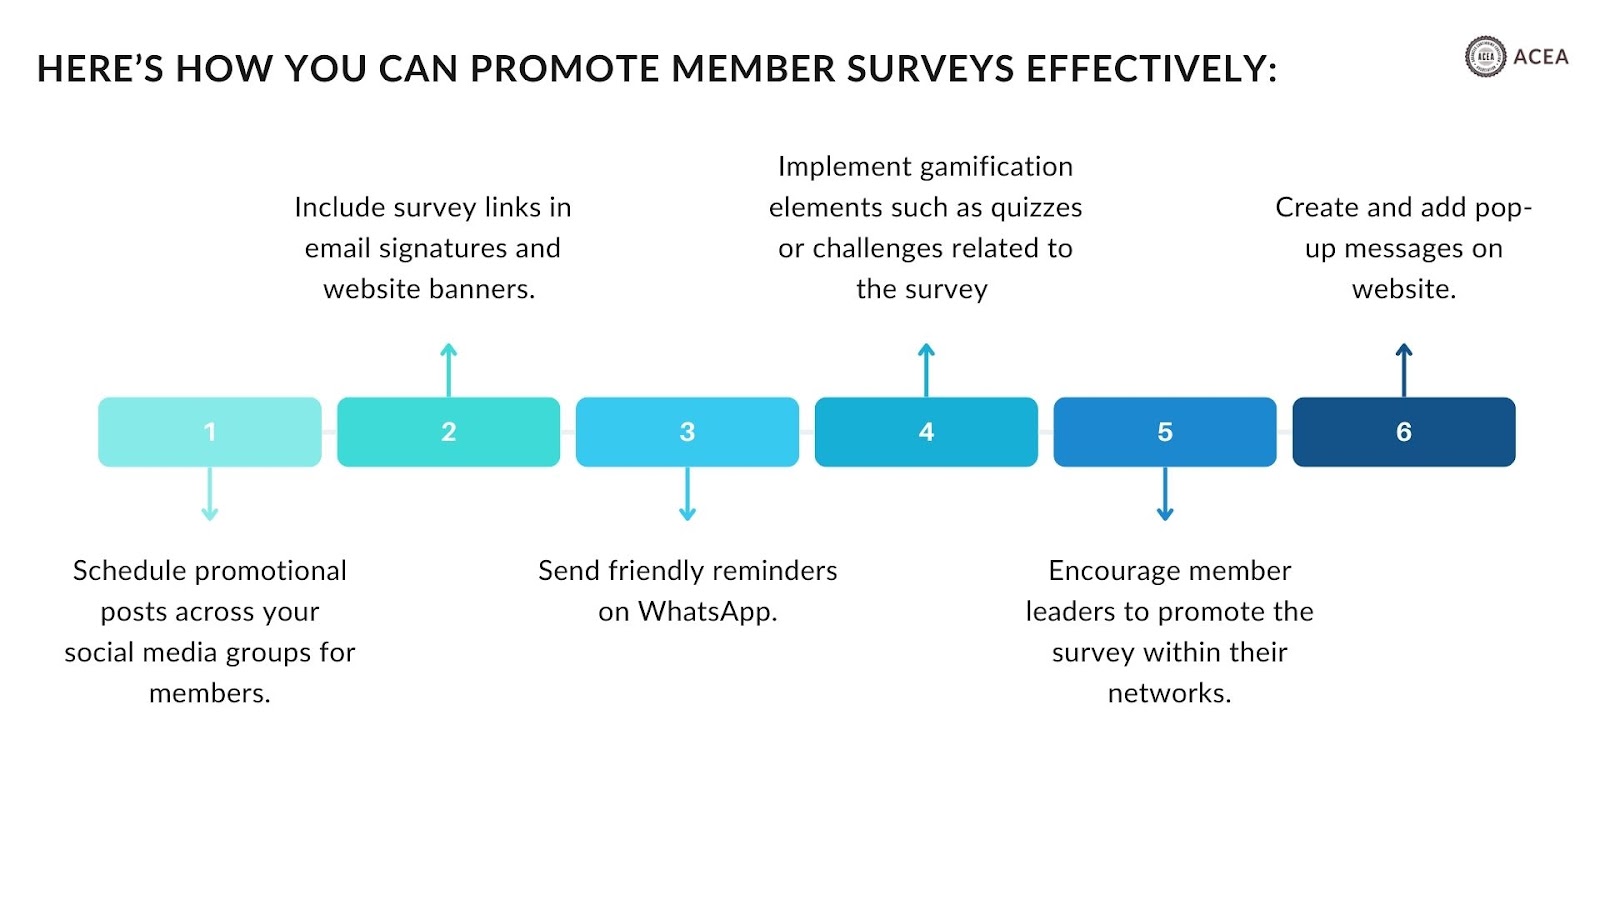 Promote member surveys effectively